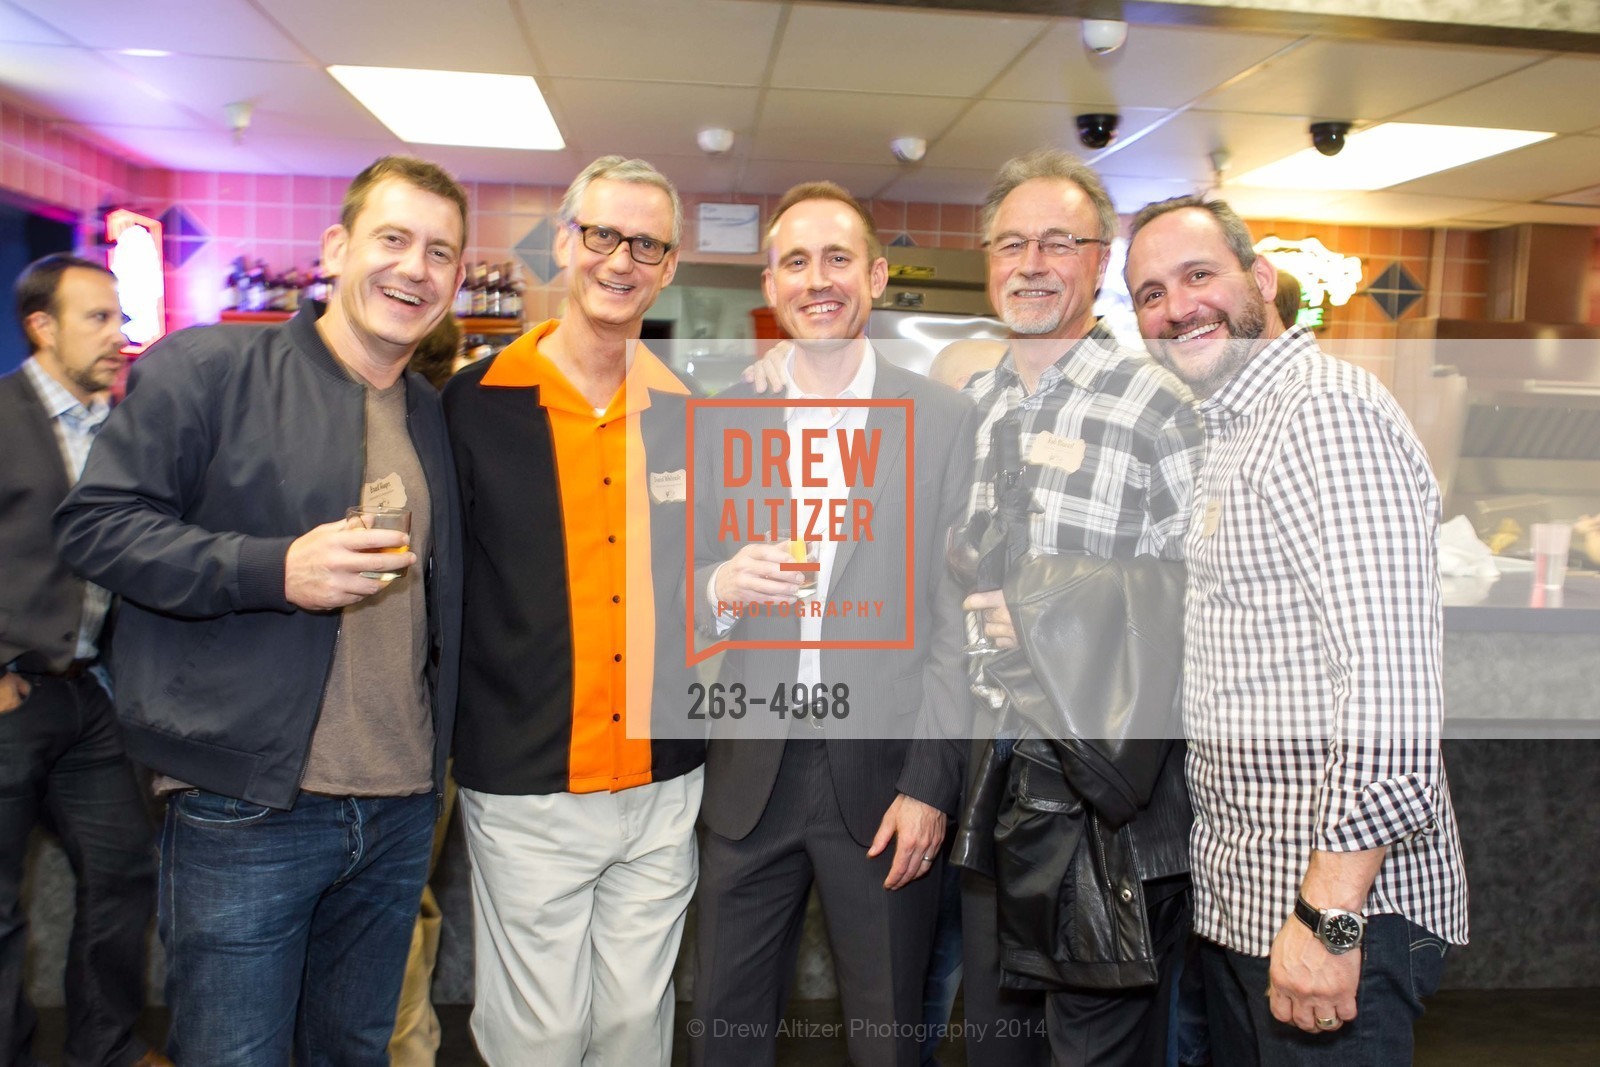 Brad Hayes, David Whiteside, Tom Cruise, Rob Stewart, Brian Gianinno, Photo #263-4968